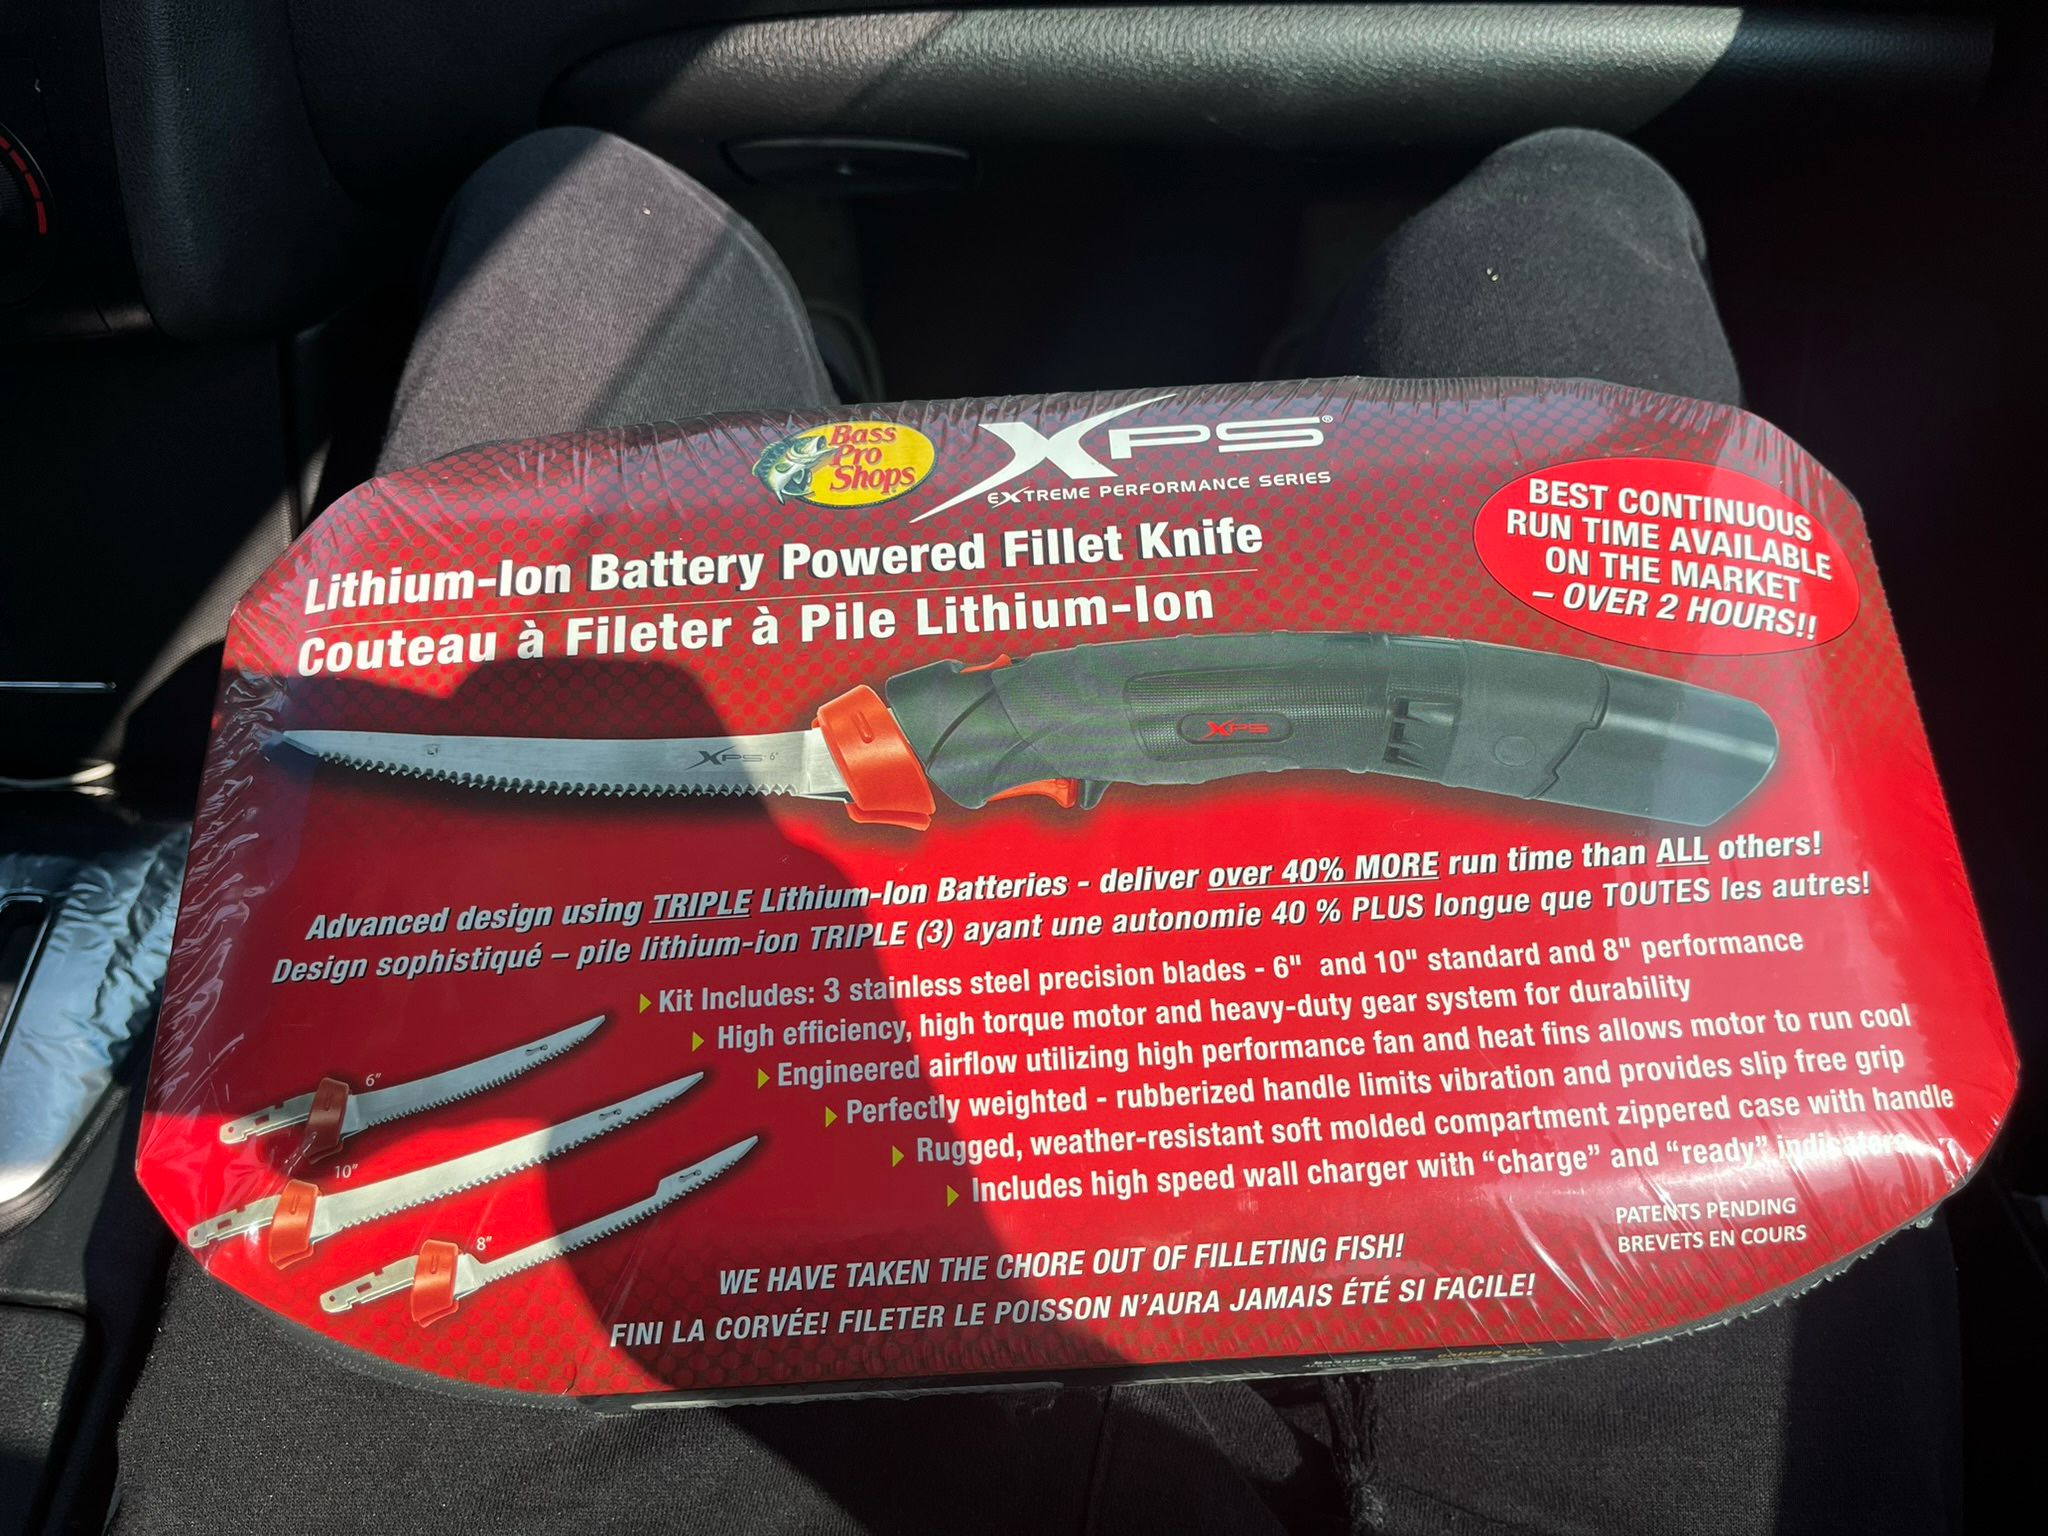 Electric Powered Fillet Knife XPS Pro Bass Pro Shop